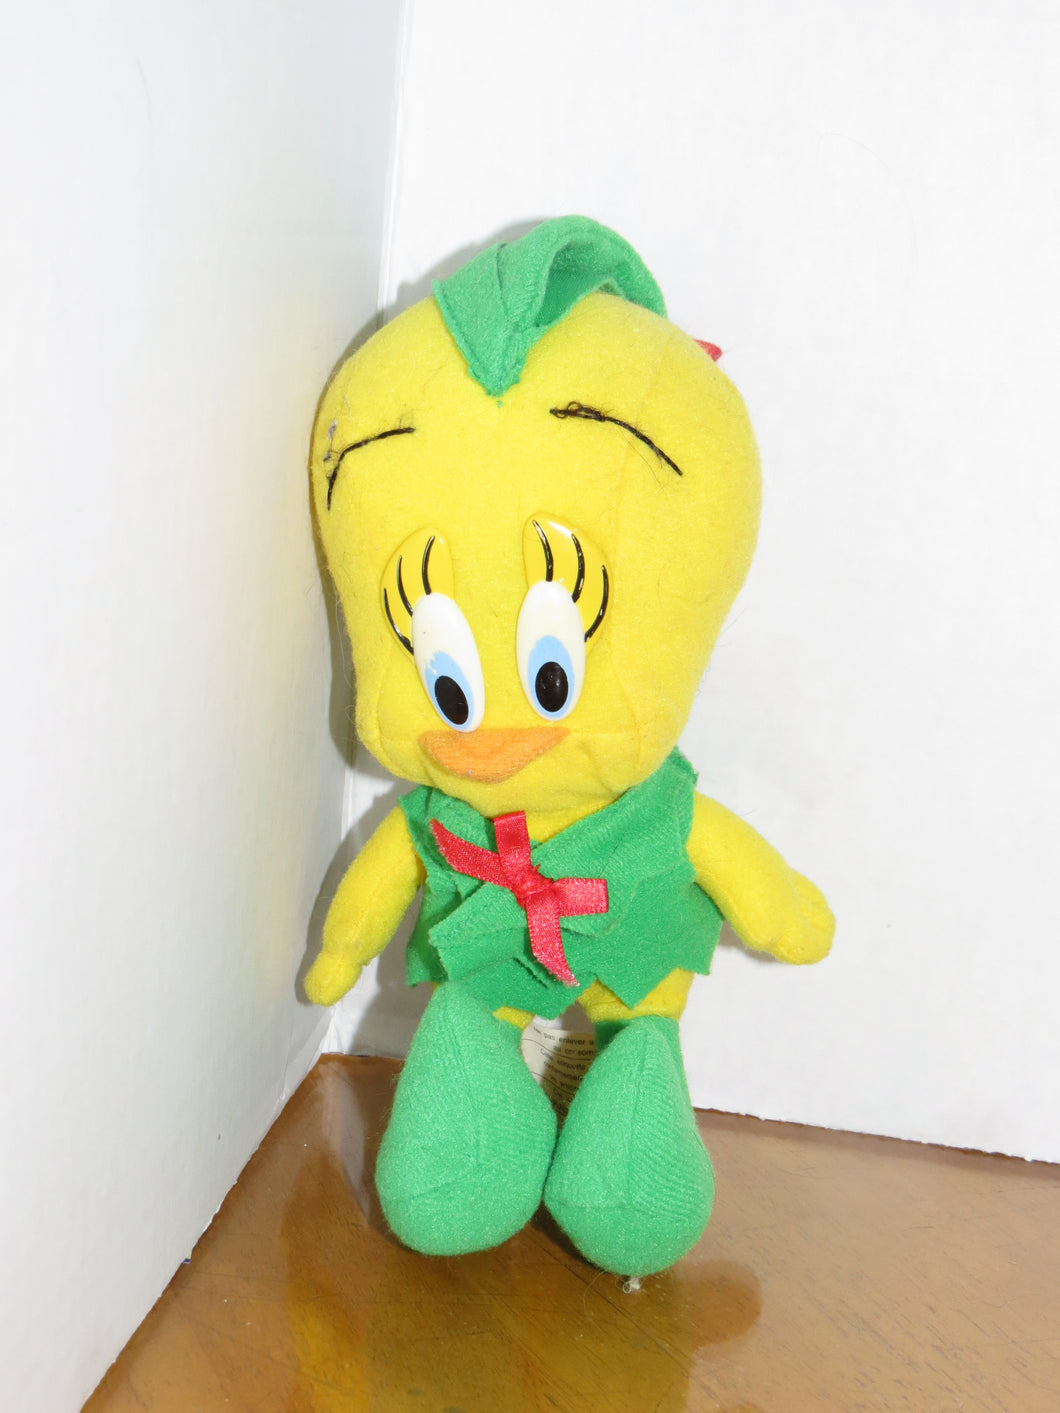 1992 McDonalds Warner Bros. LOONEY TUNES - TWEETY stuffed doll 8''tall